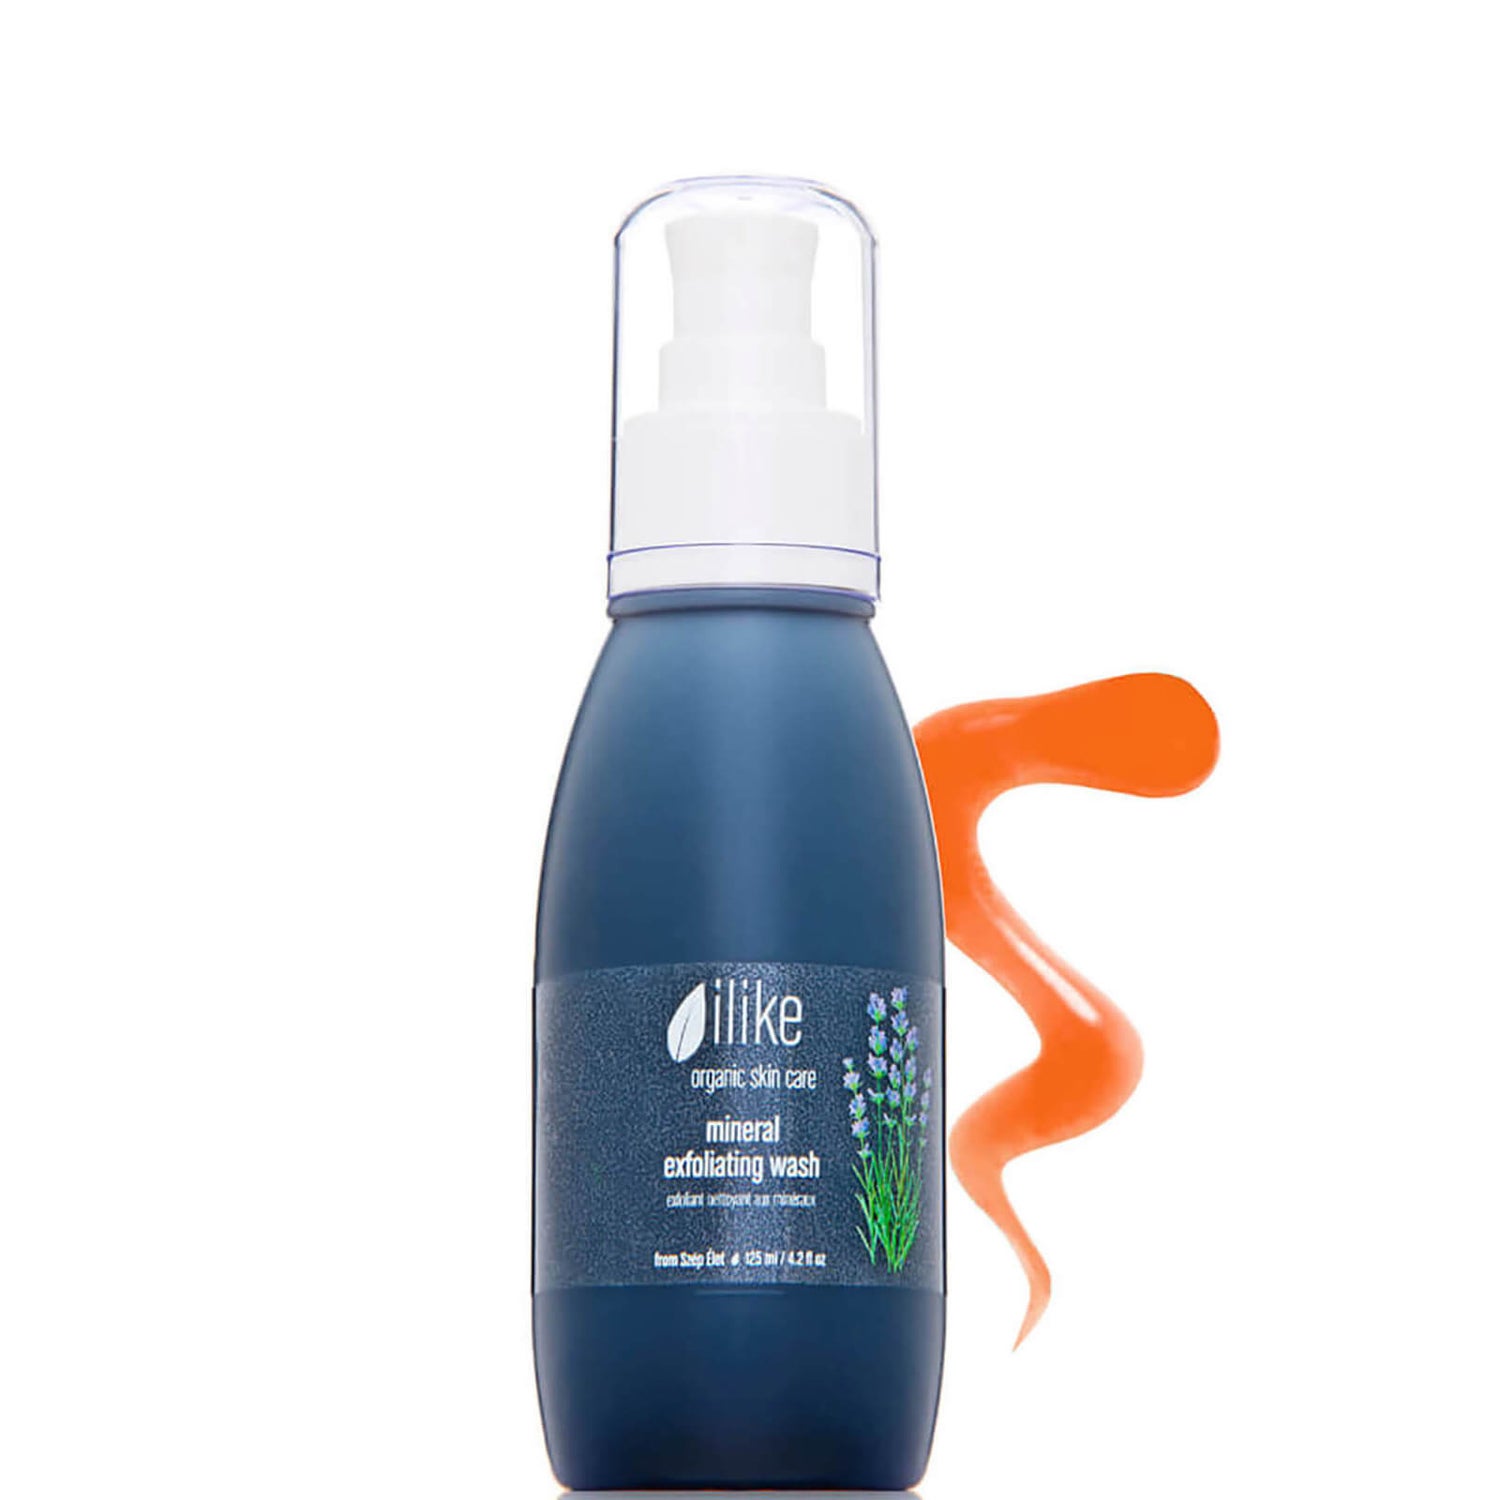 ilike organic skin care Mineral Exfoliating Wash (3.4 fl. oz.)